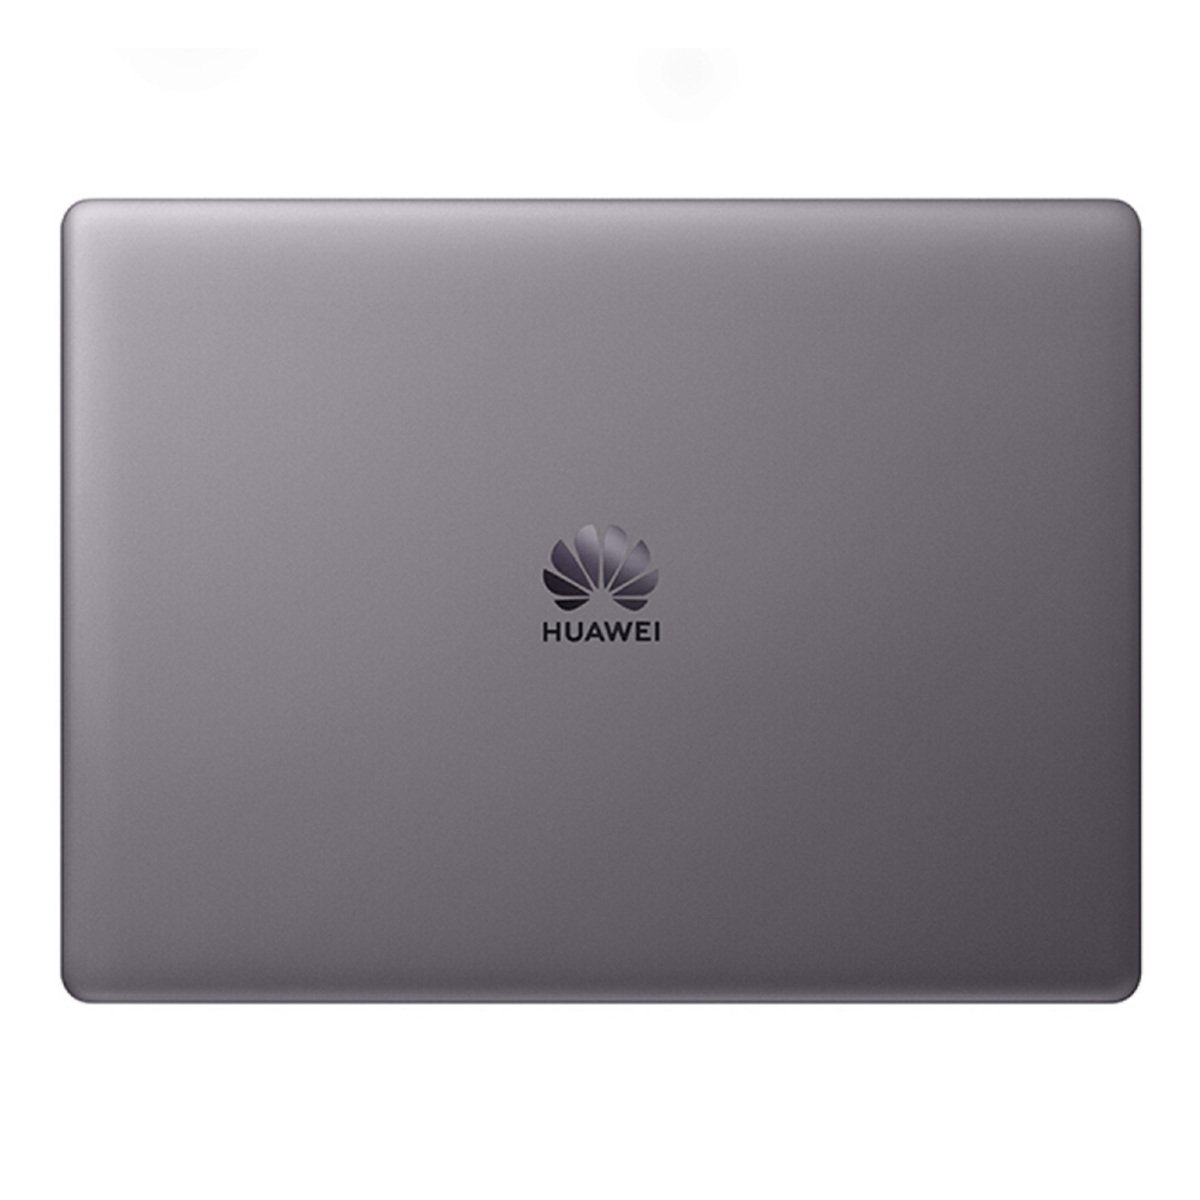 Huawei MateBook 13 Corei7-8565,512GB SSD,8GB RAM,Intel UHD Graphics 620, Grey